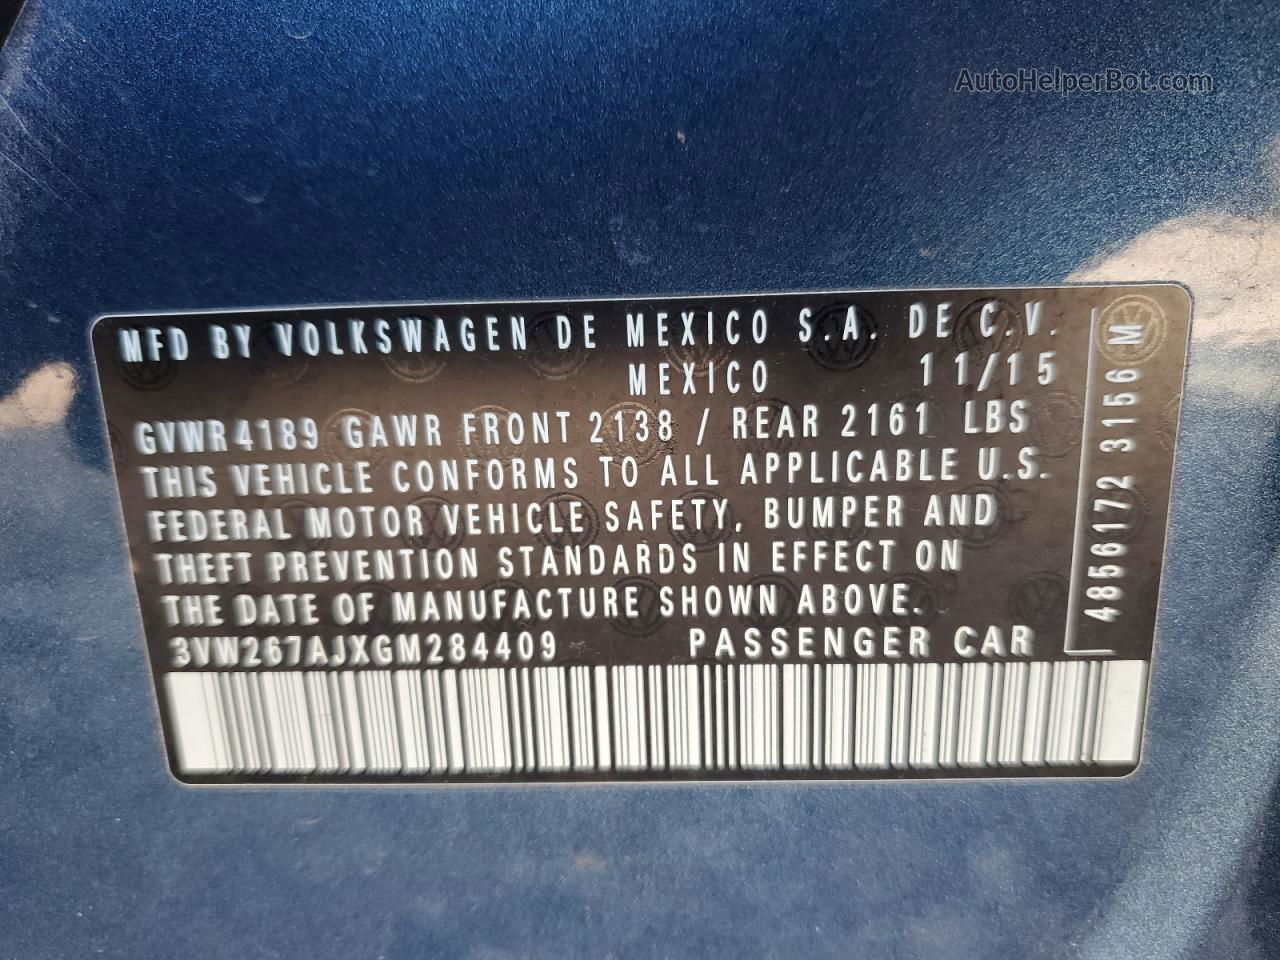 2016 Volkswagen Jetta S Blue vin: 3VW267AJXGM284409